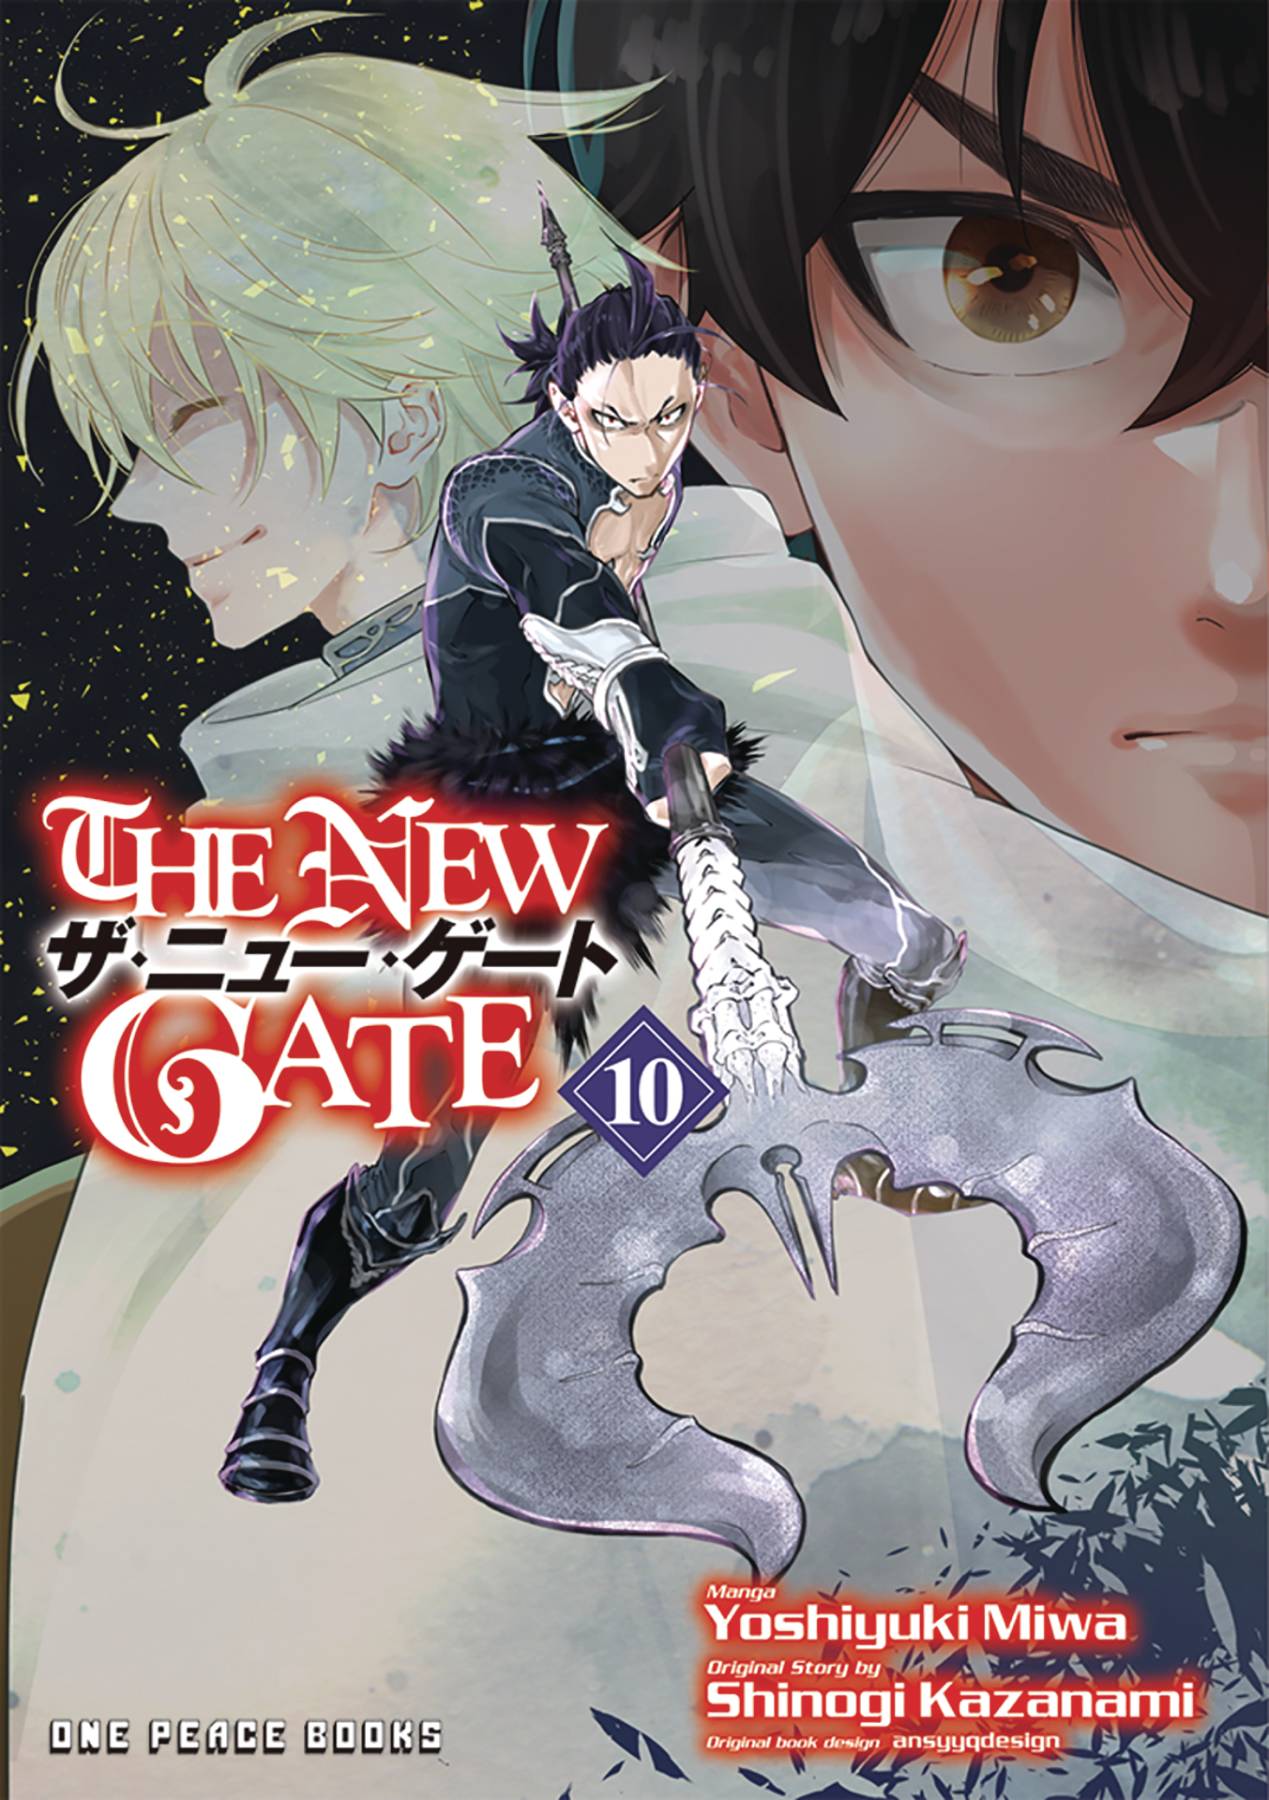 NEW GATE MANGA GN VOL 10